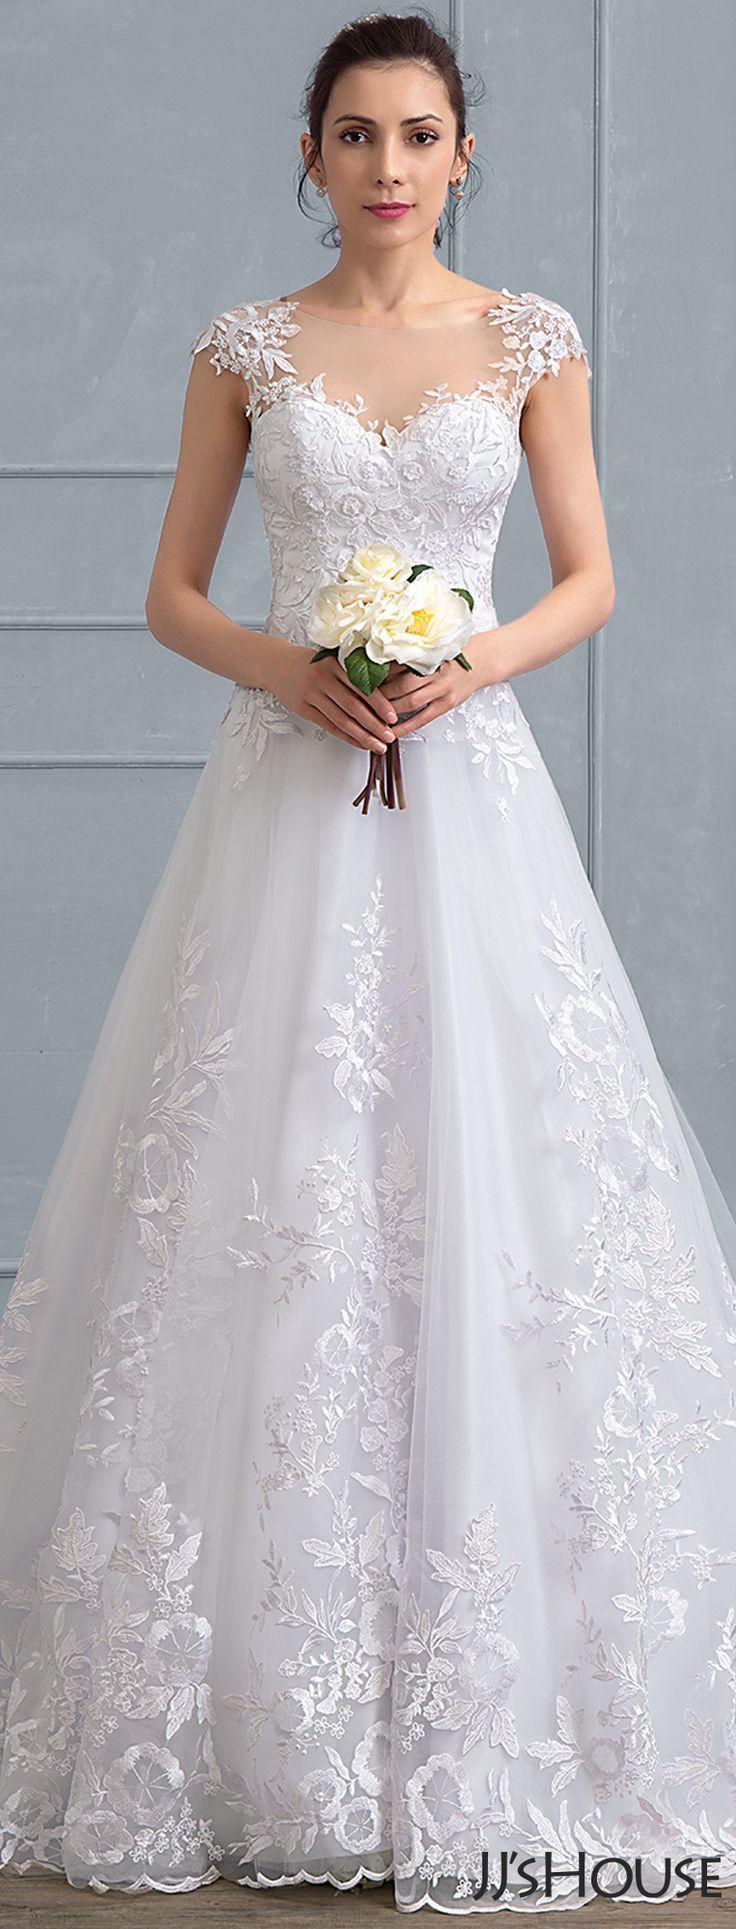 Mariage - A-Line/Princess Scoop Neck Court Train Tulle Lace Wedding Dress (002111937)